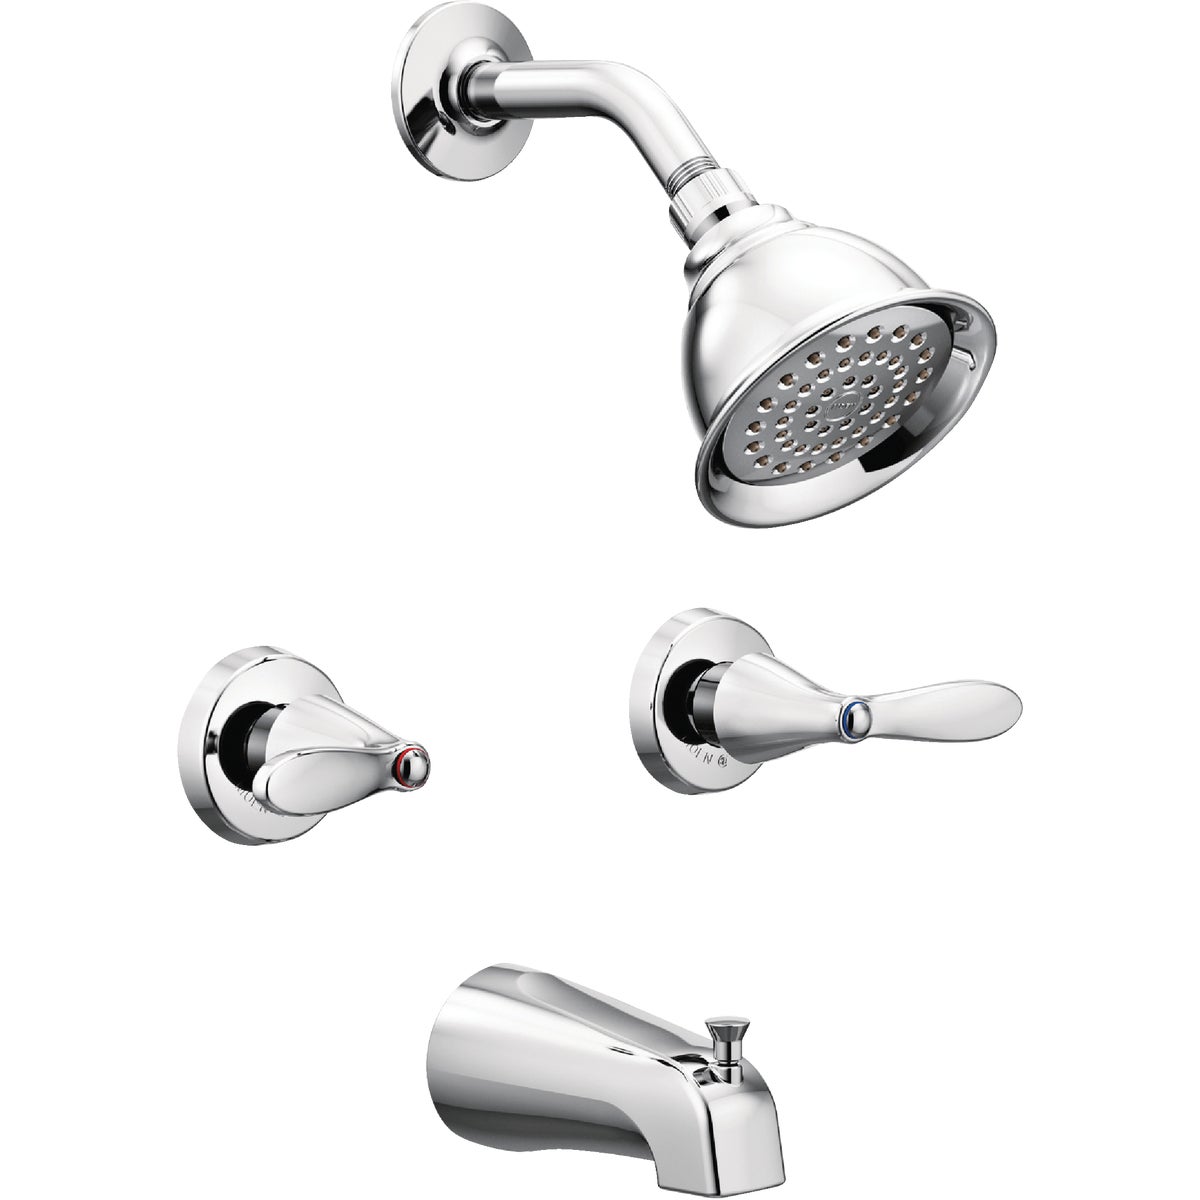 Moen Adler Chrome 2-Handle Lever Tub and Shower Faucet